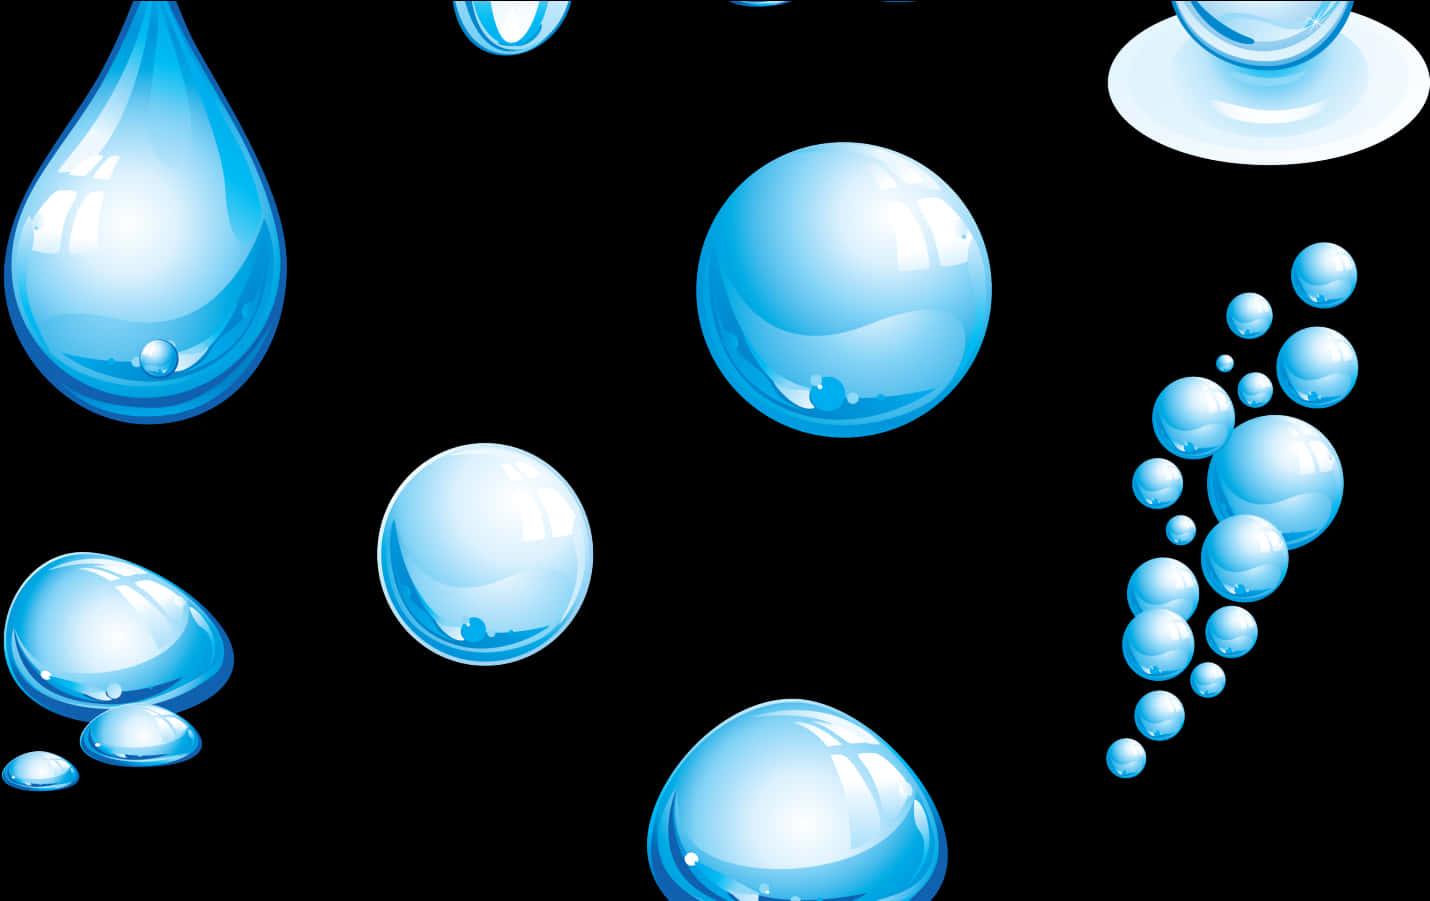 A Close-up Of A Blue Bubble